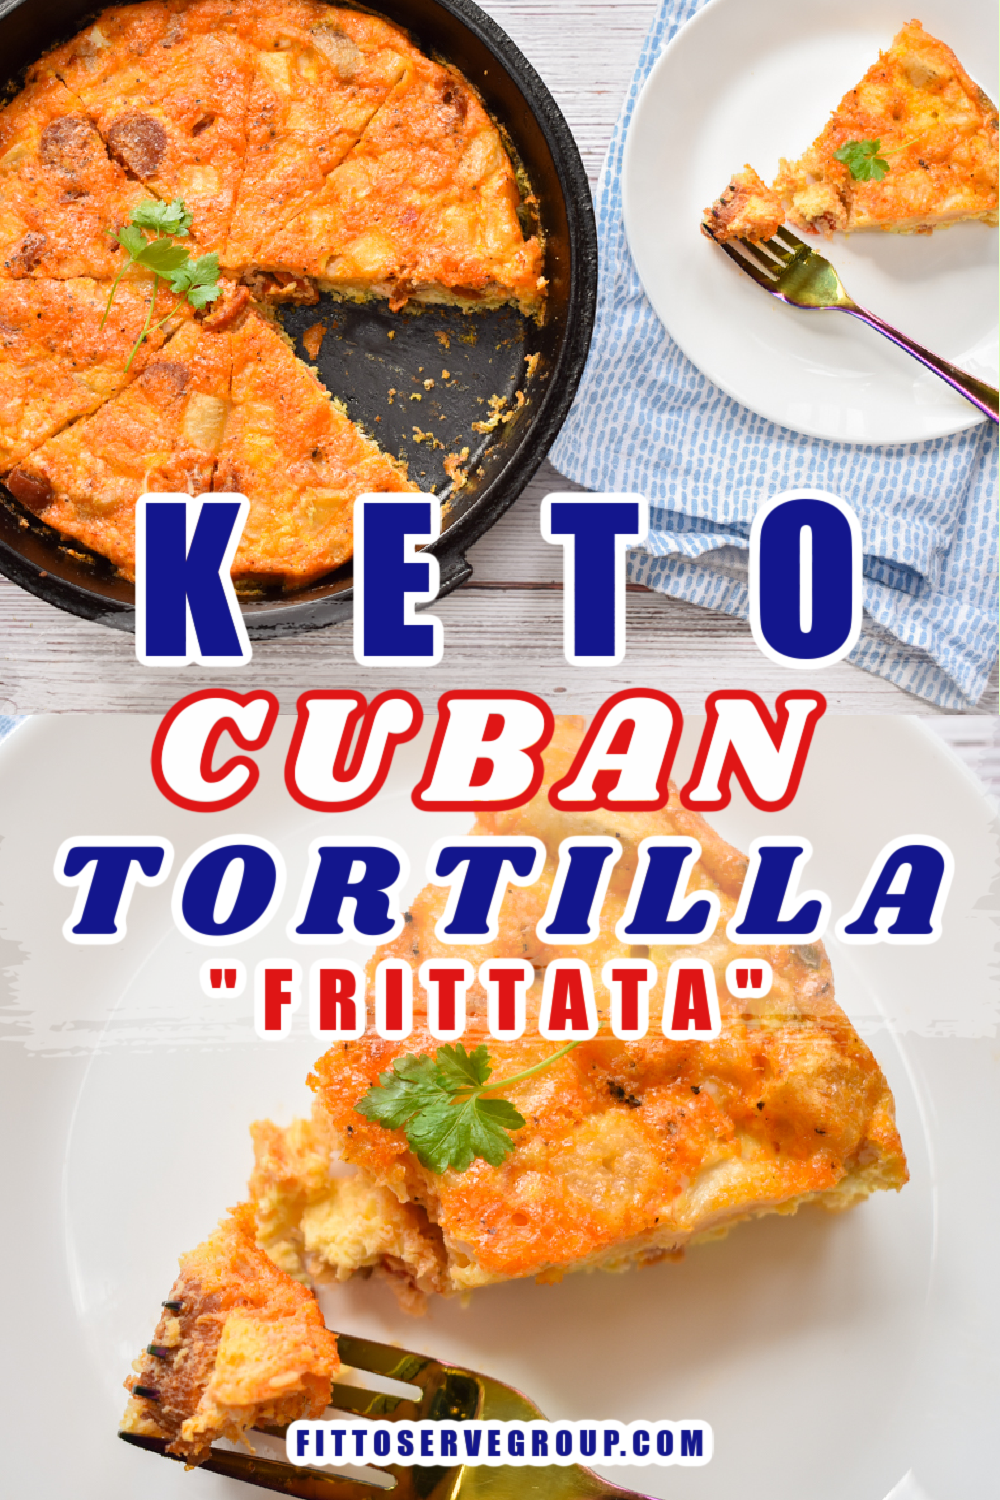 Keto Cuban Tortilla frittata baked in a cast-iron skillet